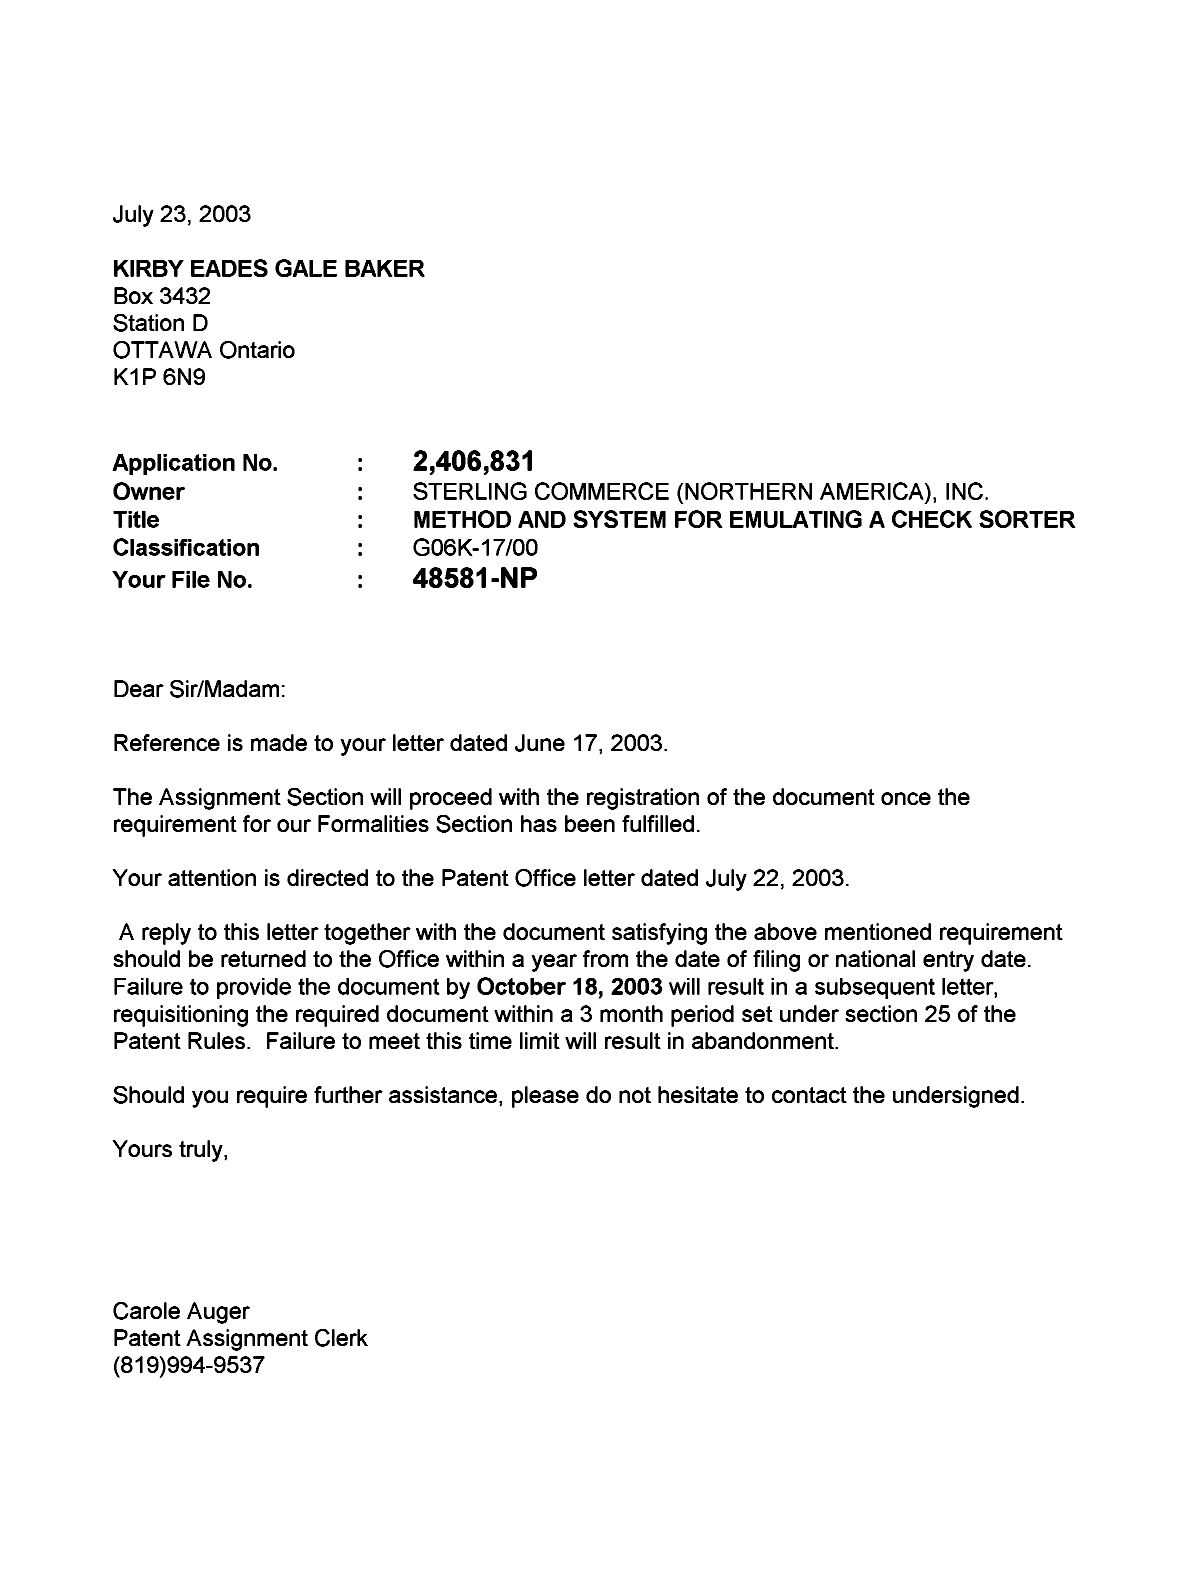 Canadian Patent Document 2406831. Correspondence 20030723. Image 1 of 1